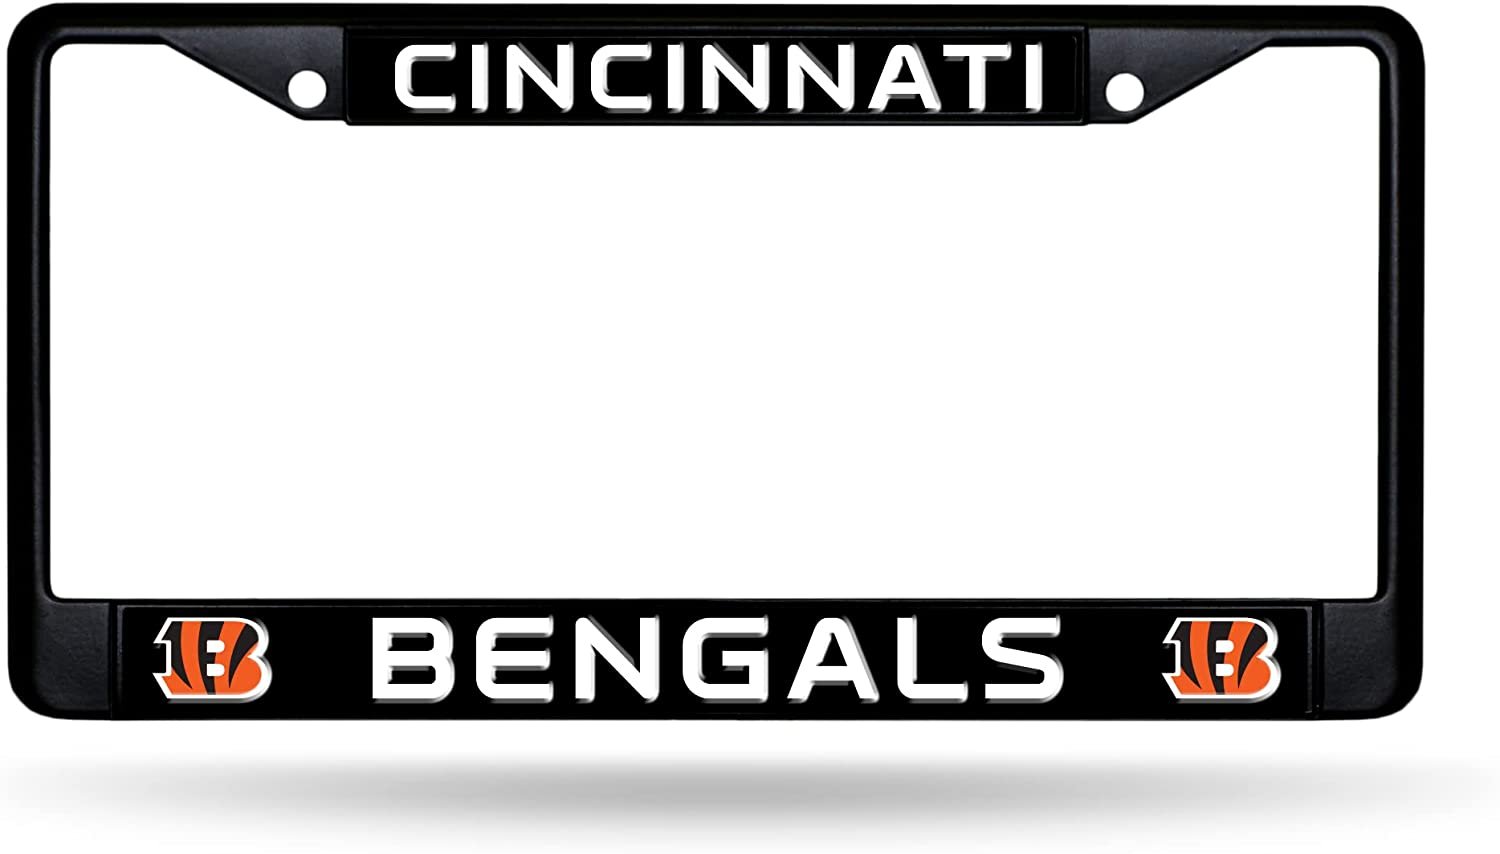 Cincinnati Bengals Black Metal License Plate Frame Chrome Tag Cover 6x12 Inch